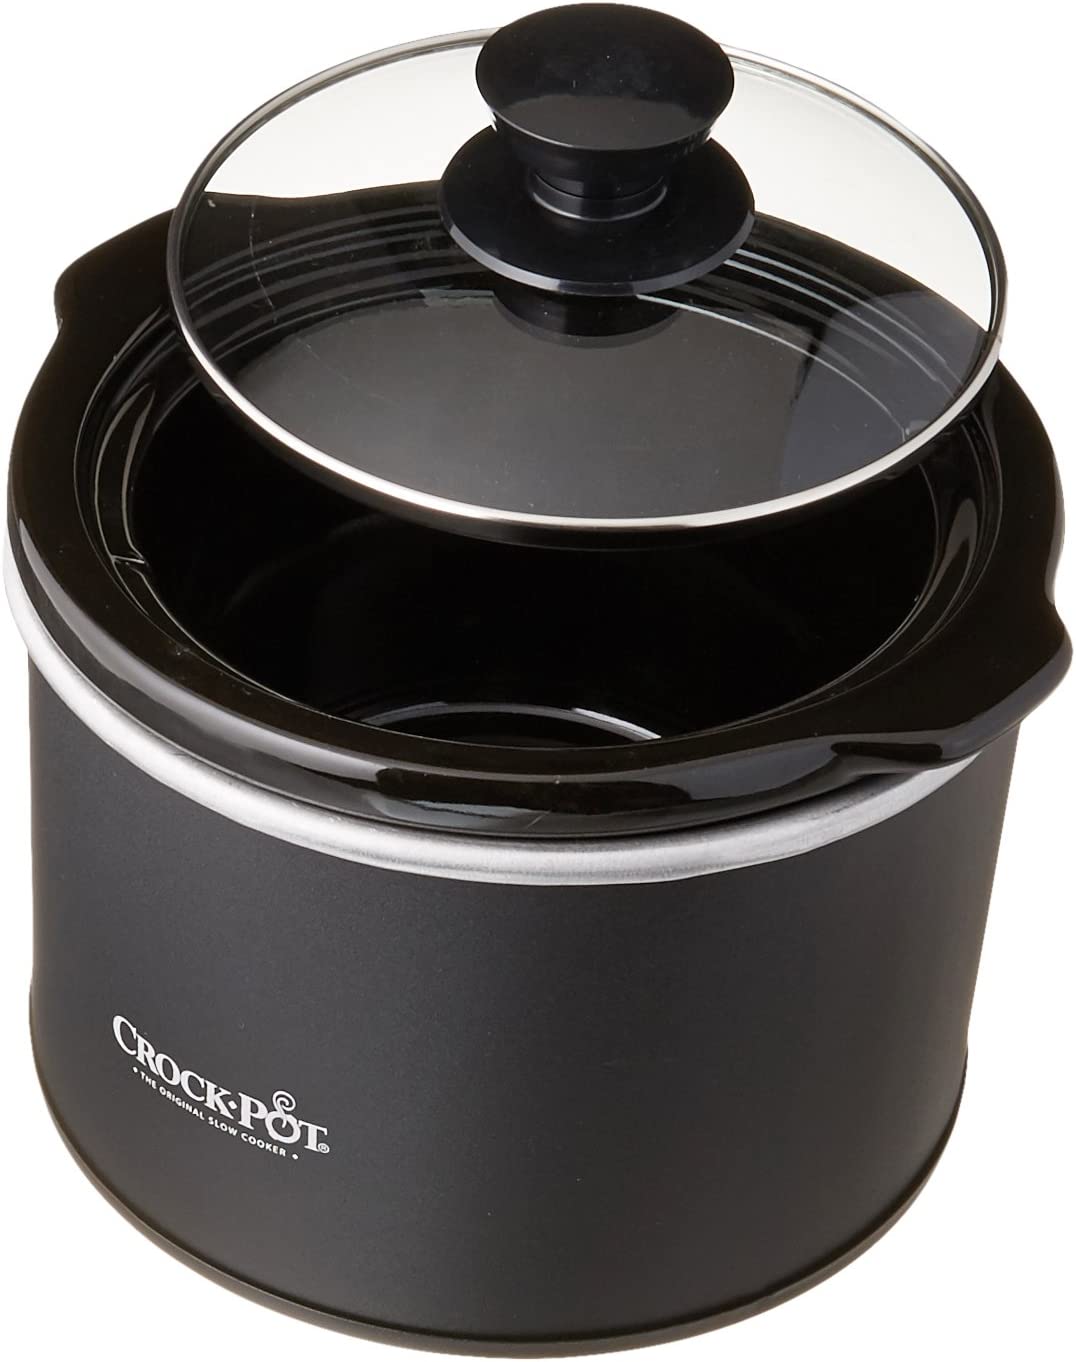 Crock-Pot SCR151 1-1/2-Quart Round Manual Slow Cooker, Black